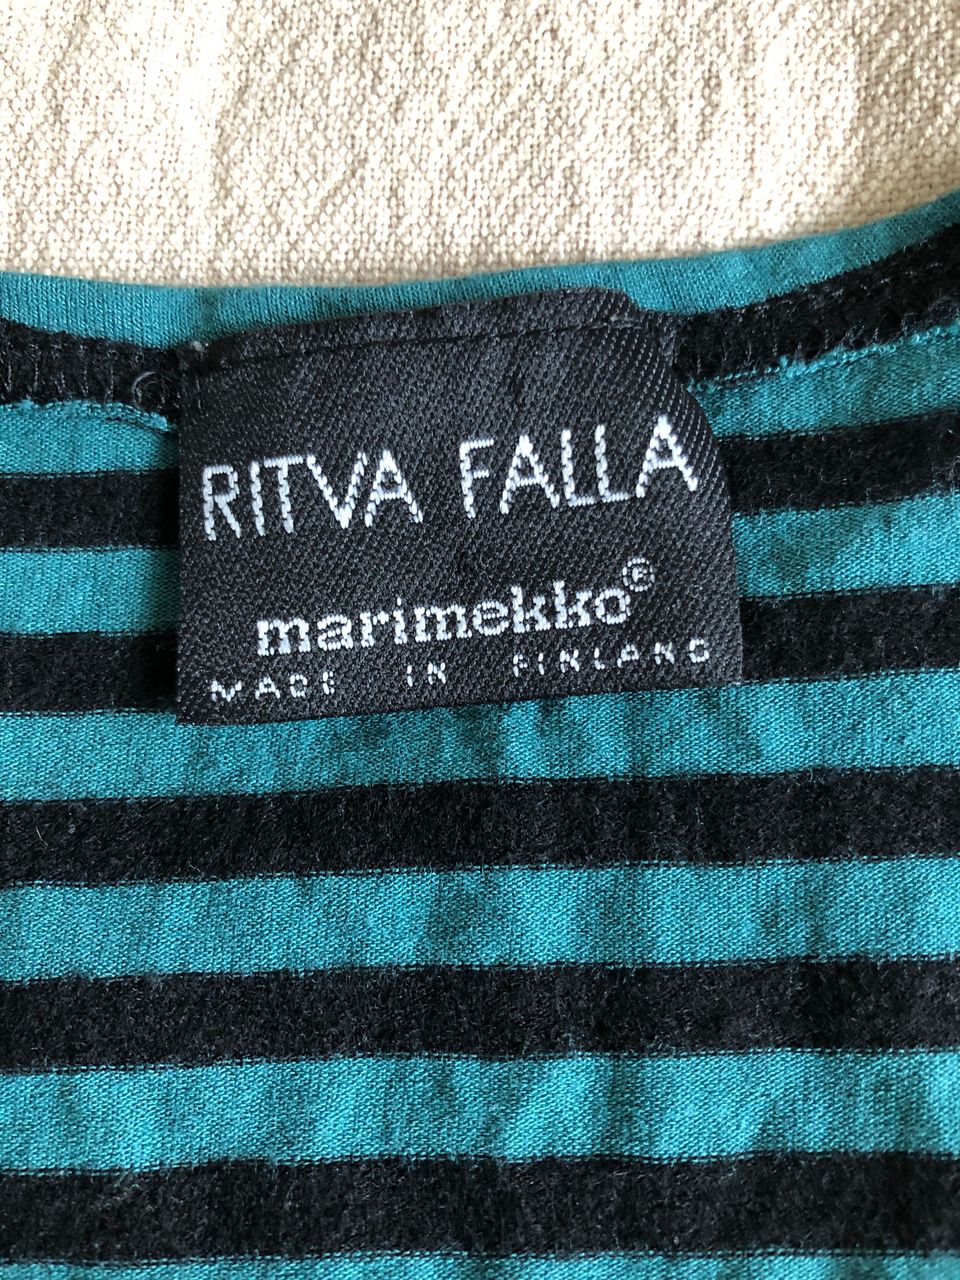 Marimekko paita Ritva Falla, made in Finland, koko M